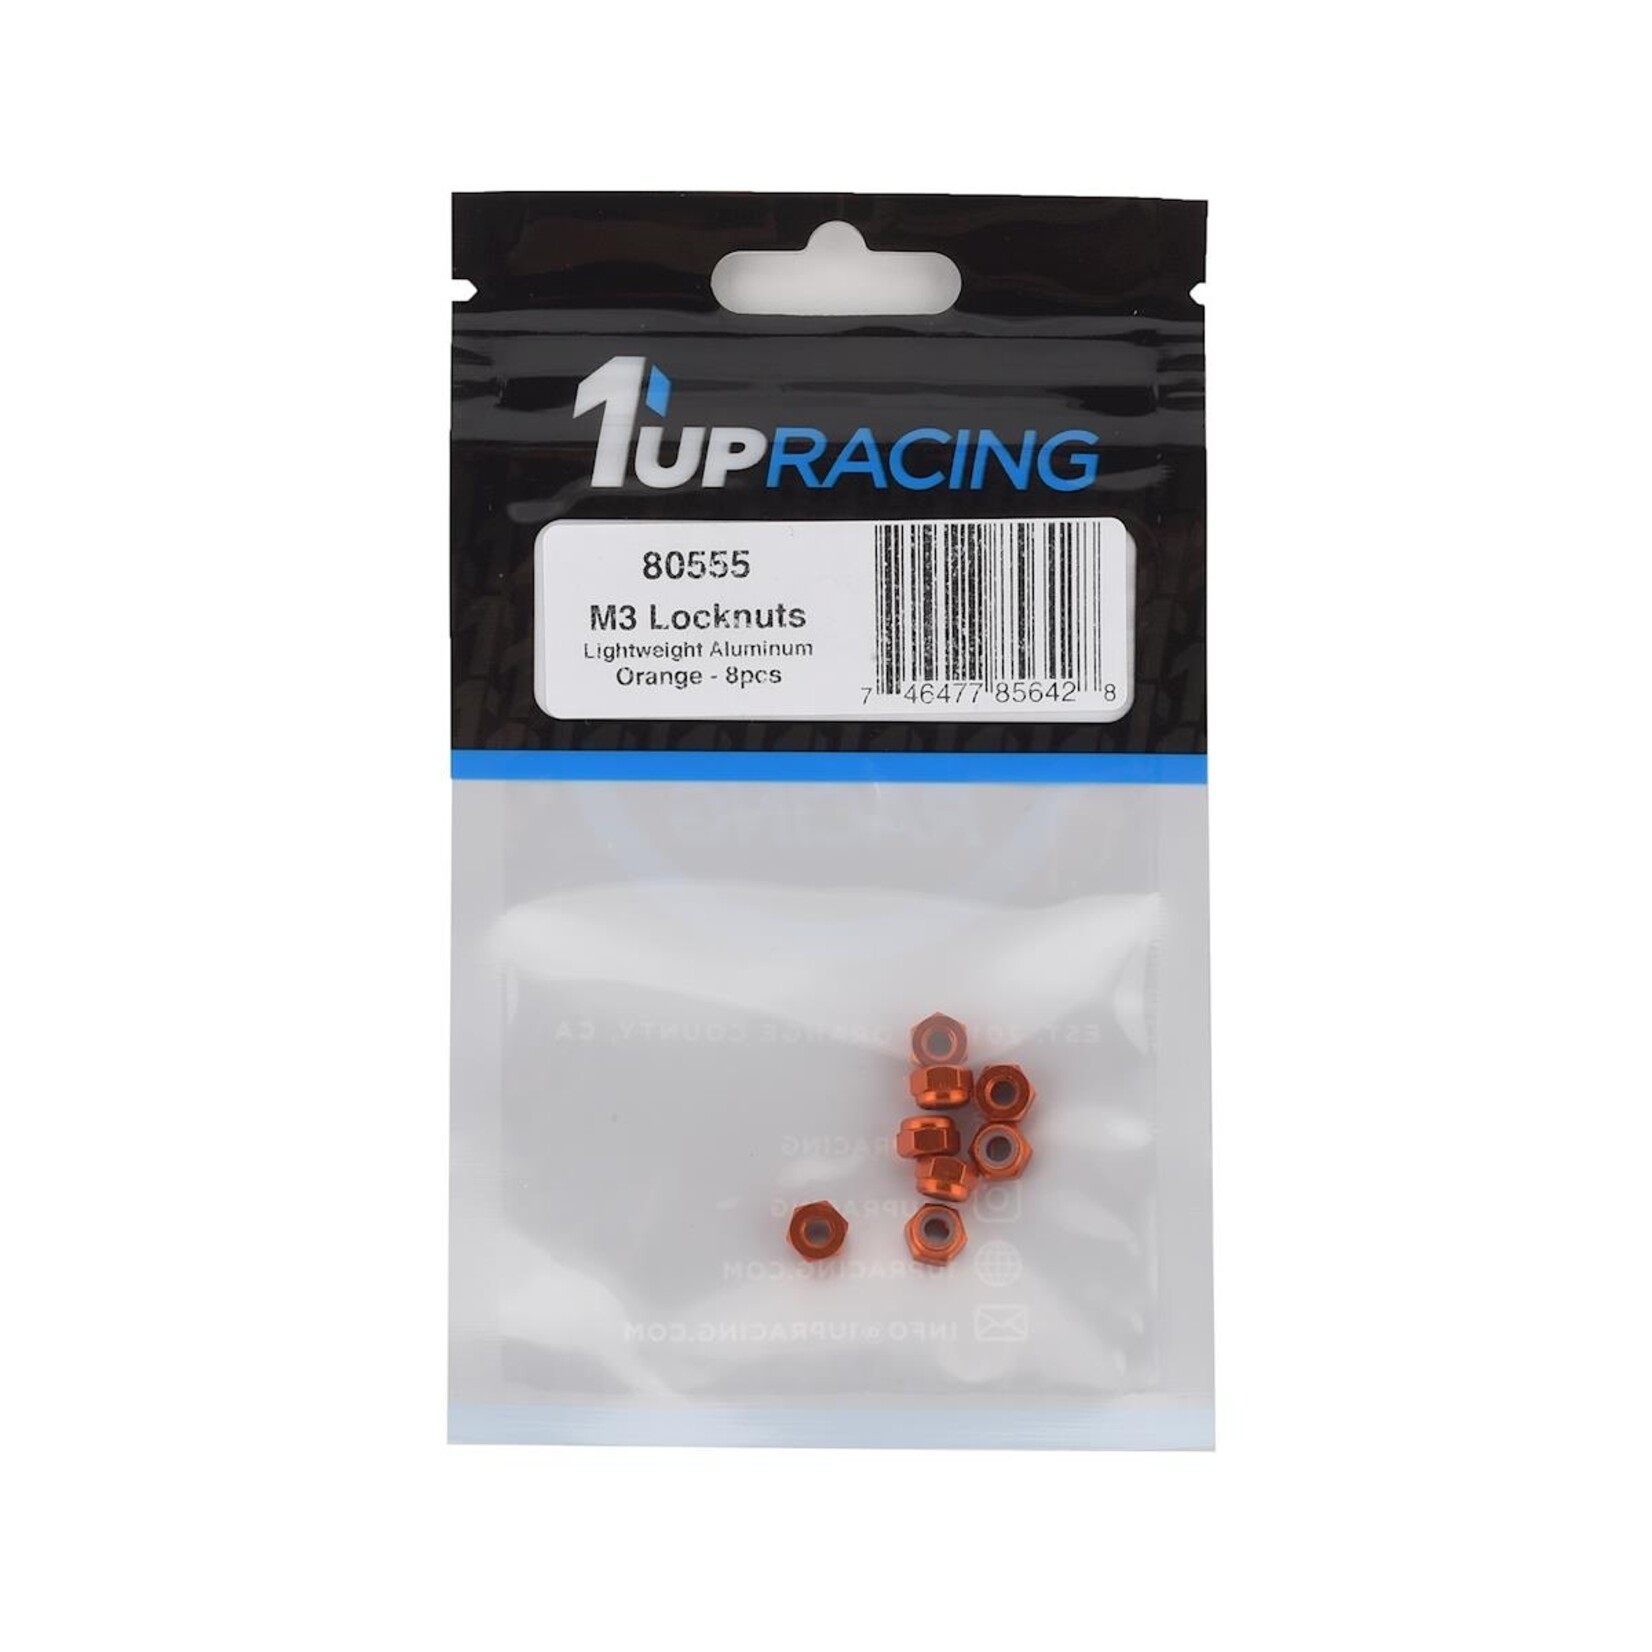 1UP Racing 1UP Racing 3mm Aluminum Locknuts (Orange) (8) #80555